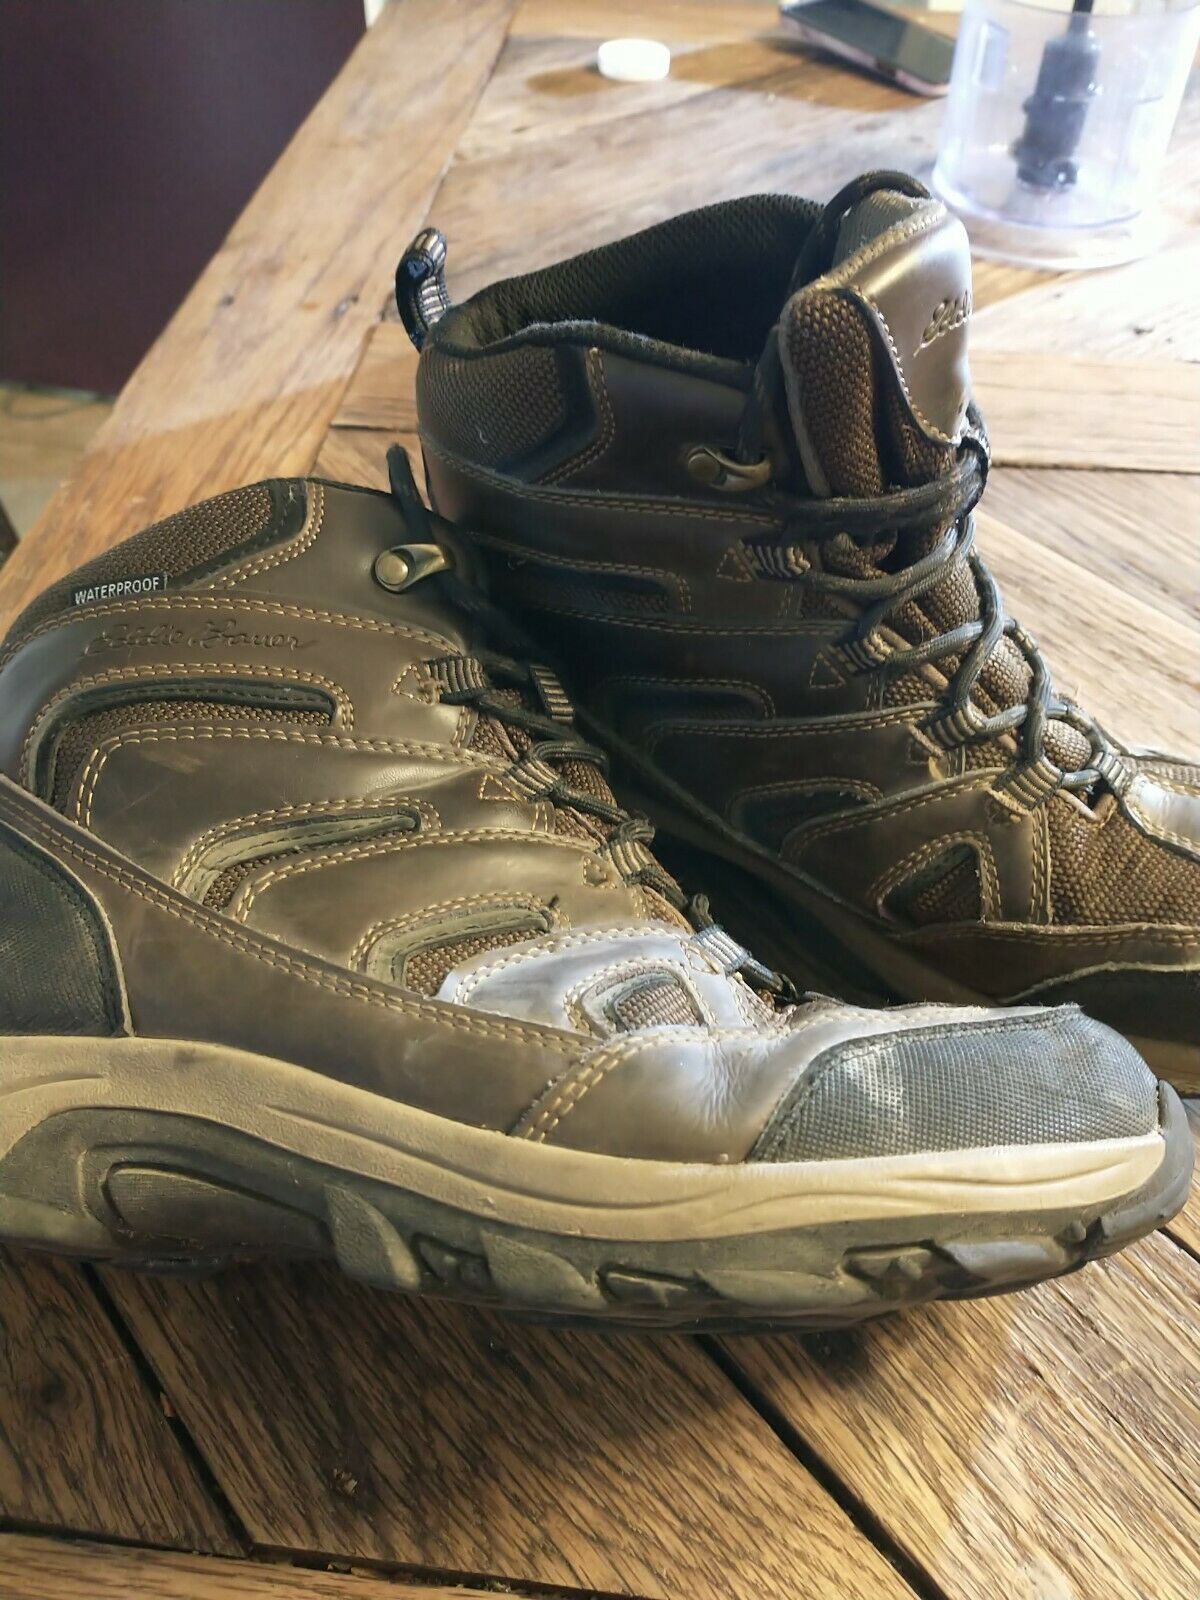 Eddie Bauer Men's Graham Hiking Boots Leather Waterproof - Brown, Size 8.5